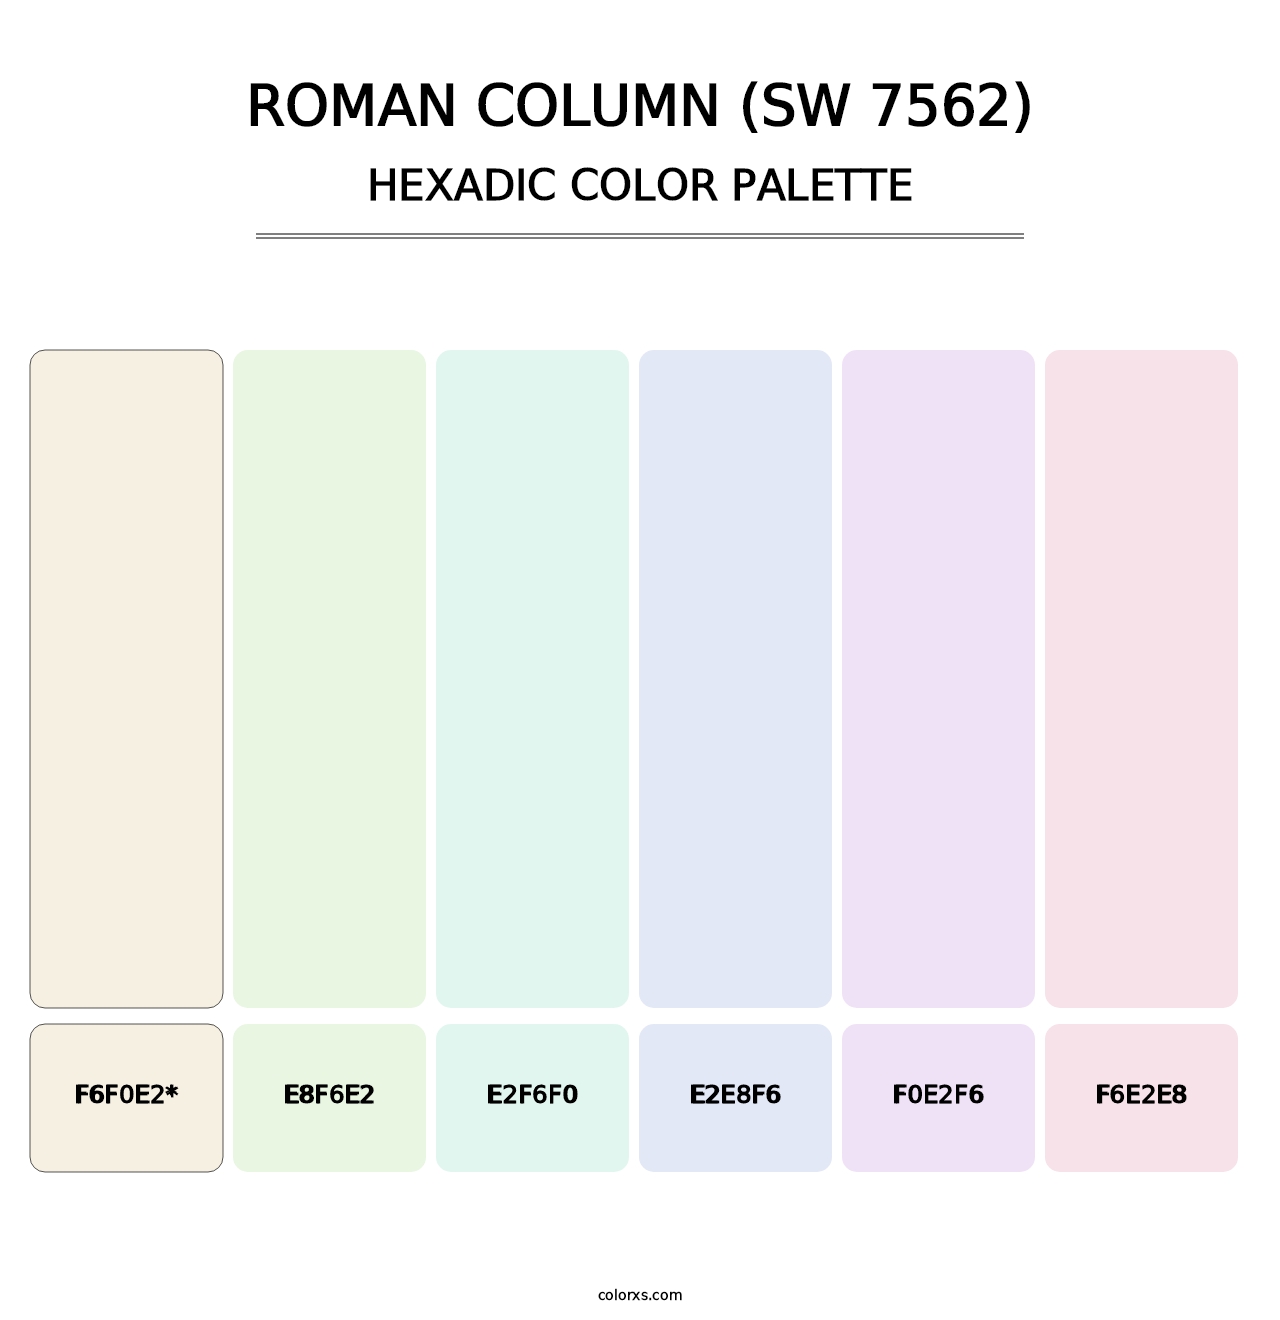 Roman Column (SW 7562) - Hexadic Color Palette